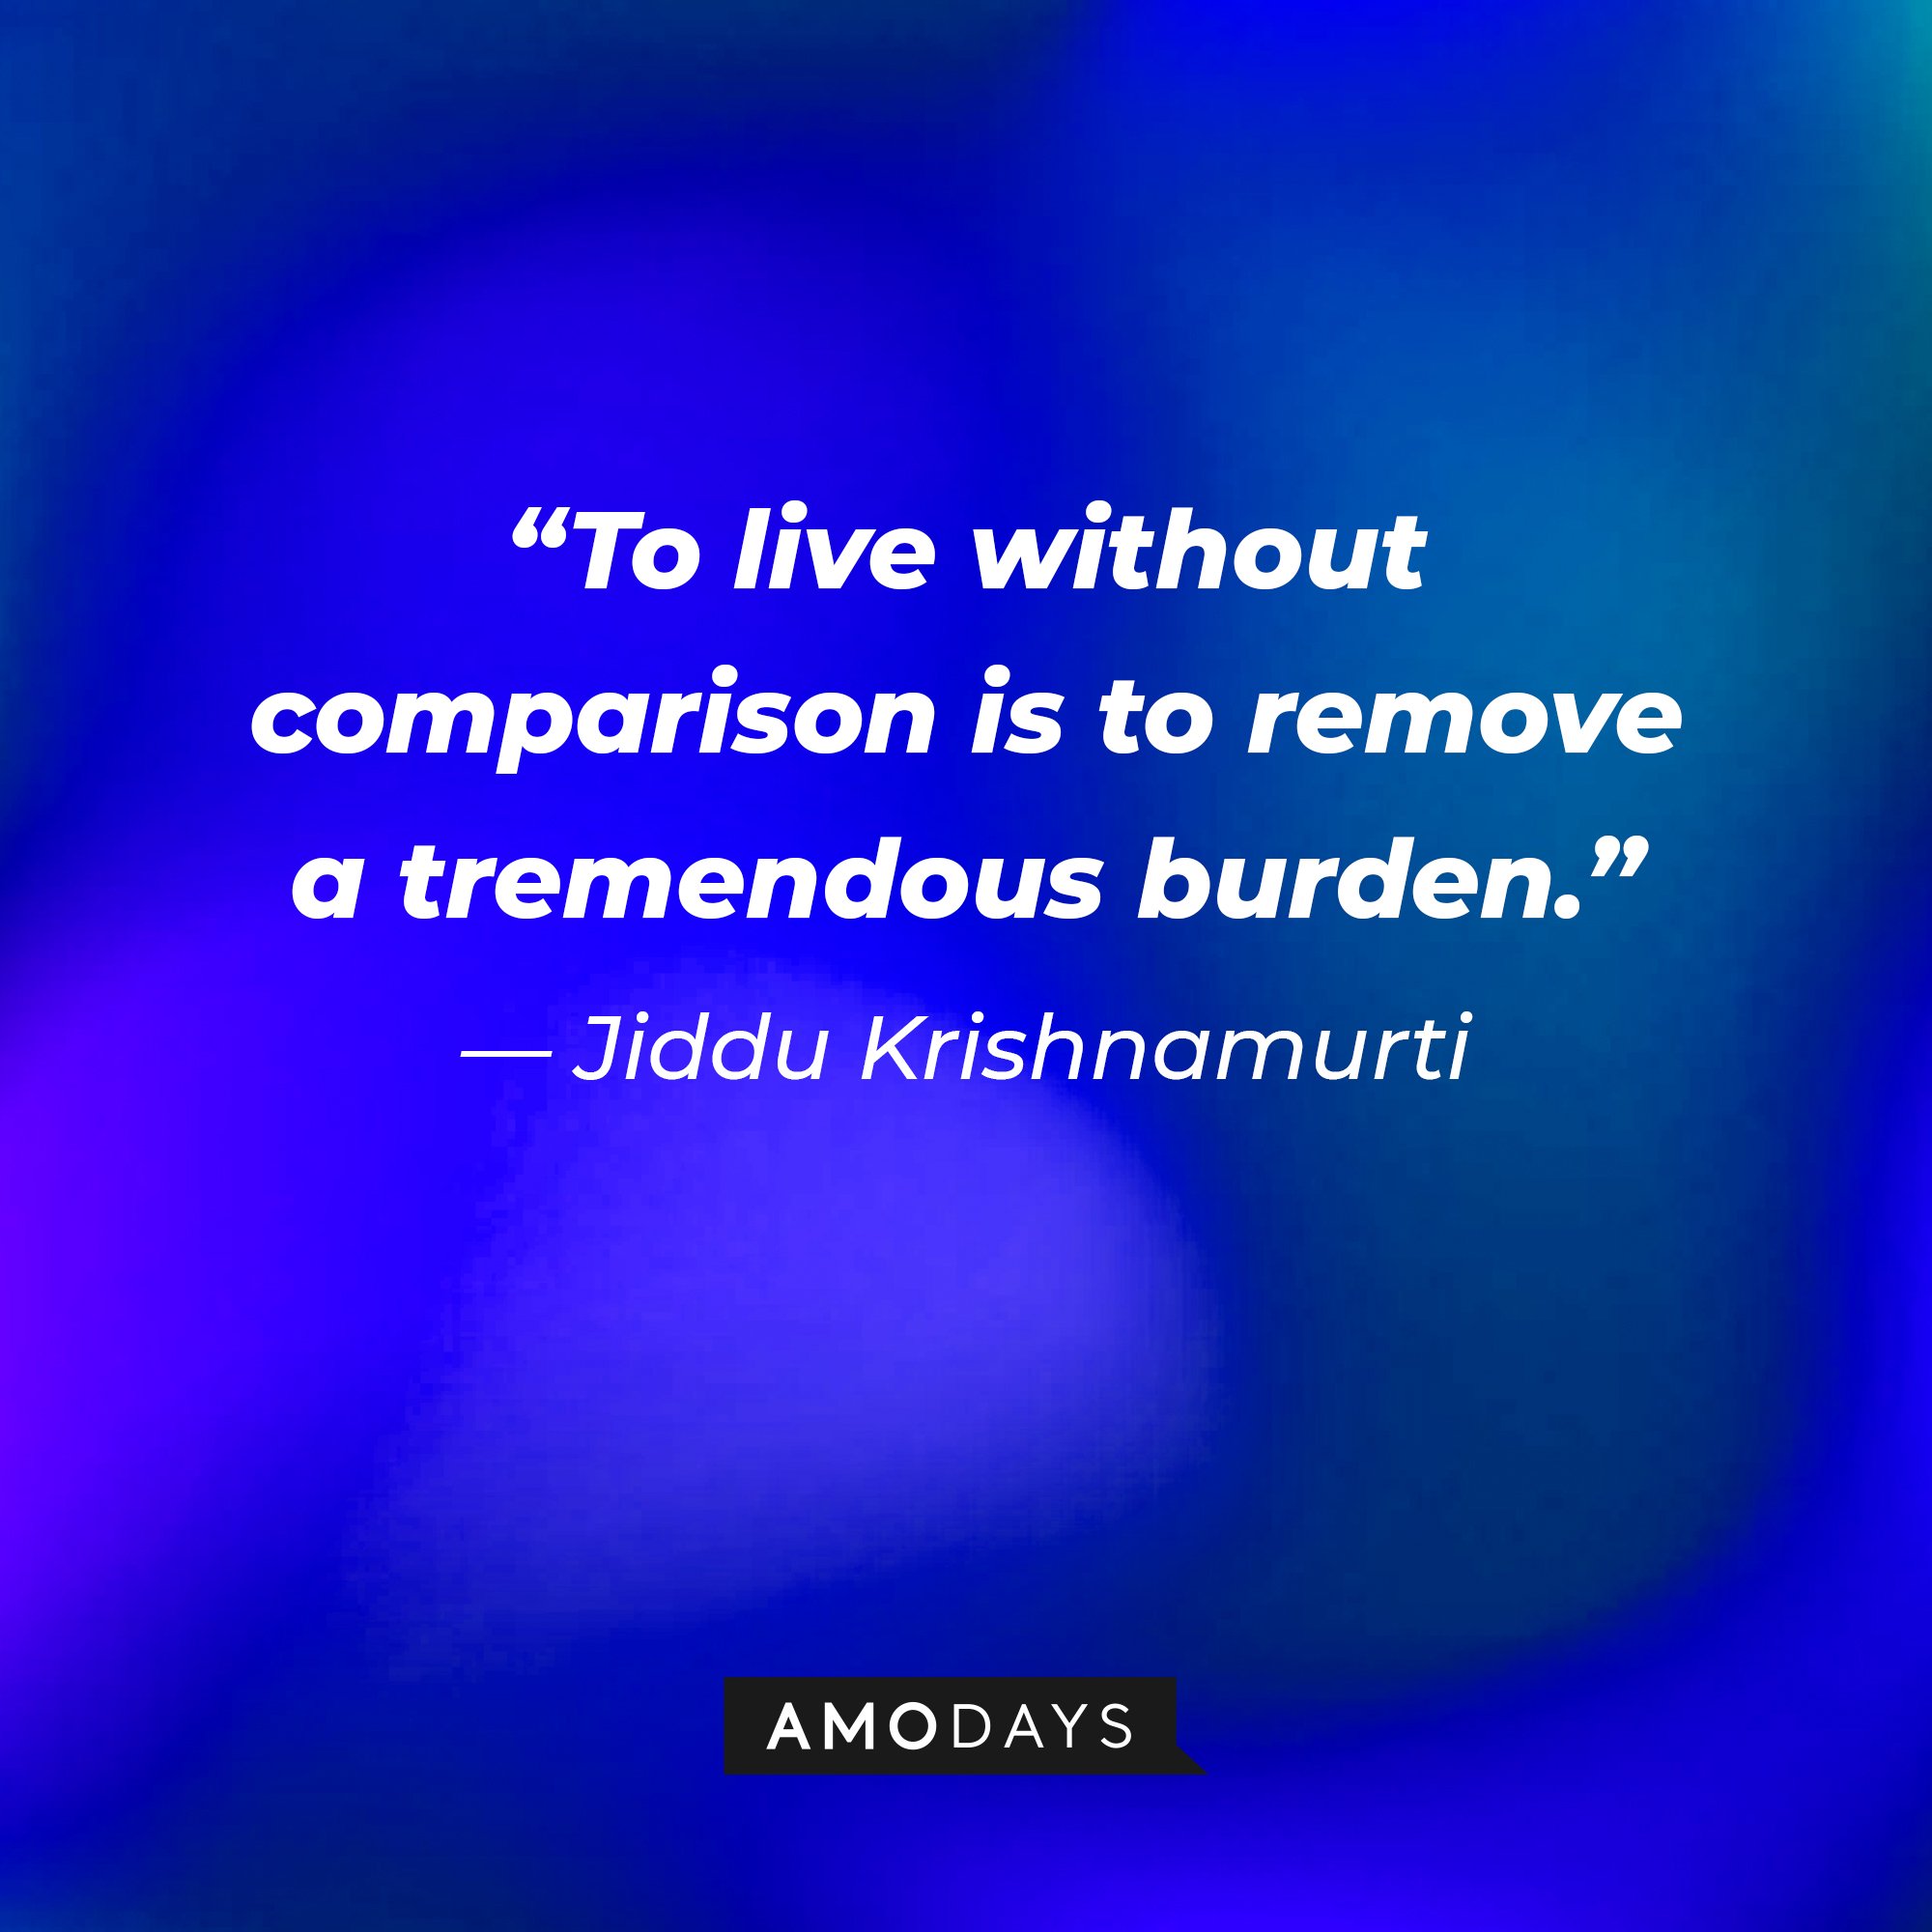  Jiddu Krishnamurti's quote: “To live without comparison is to remove a tremendous burden.” | Image: AmoDays